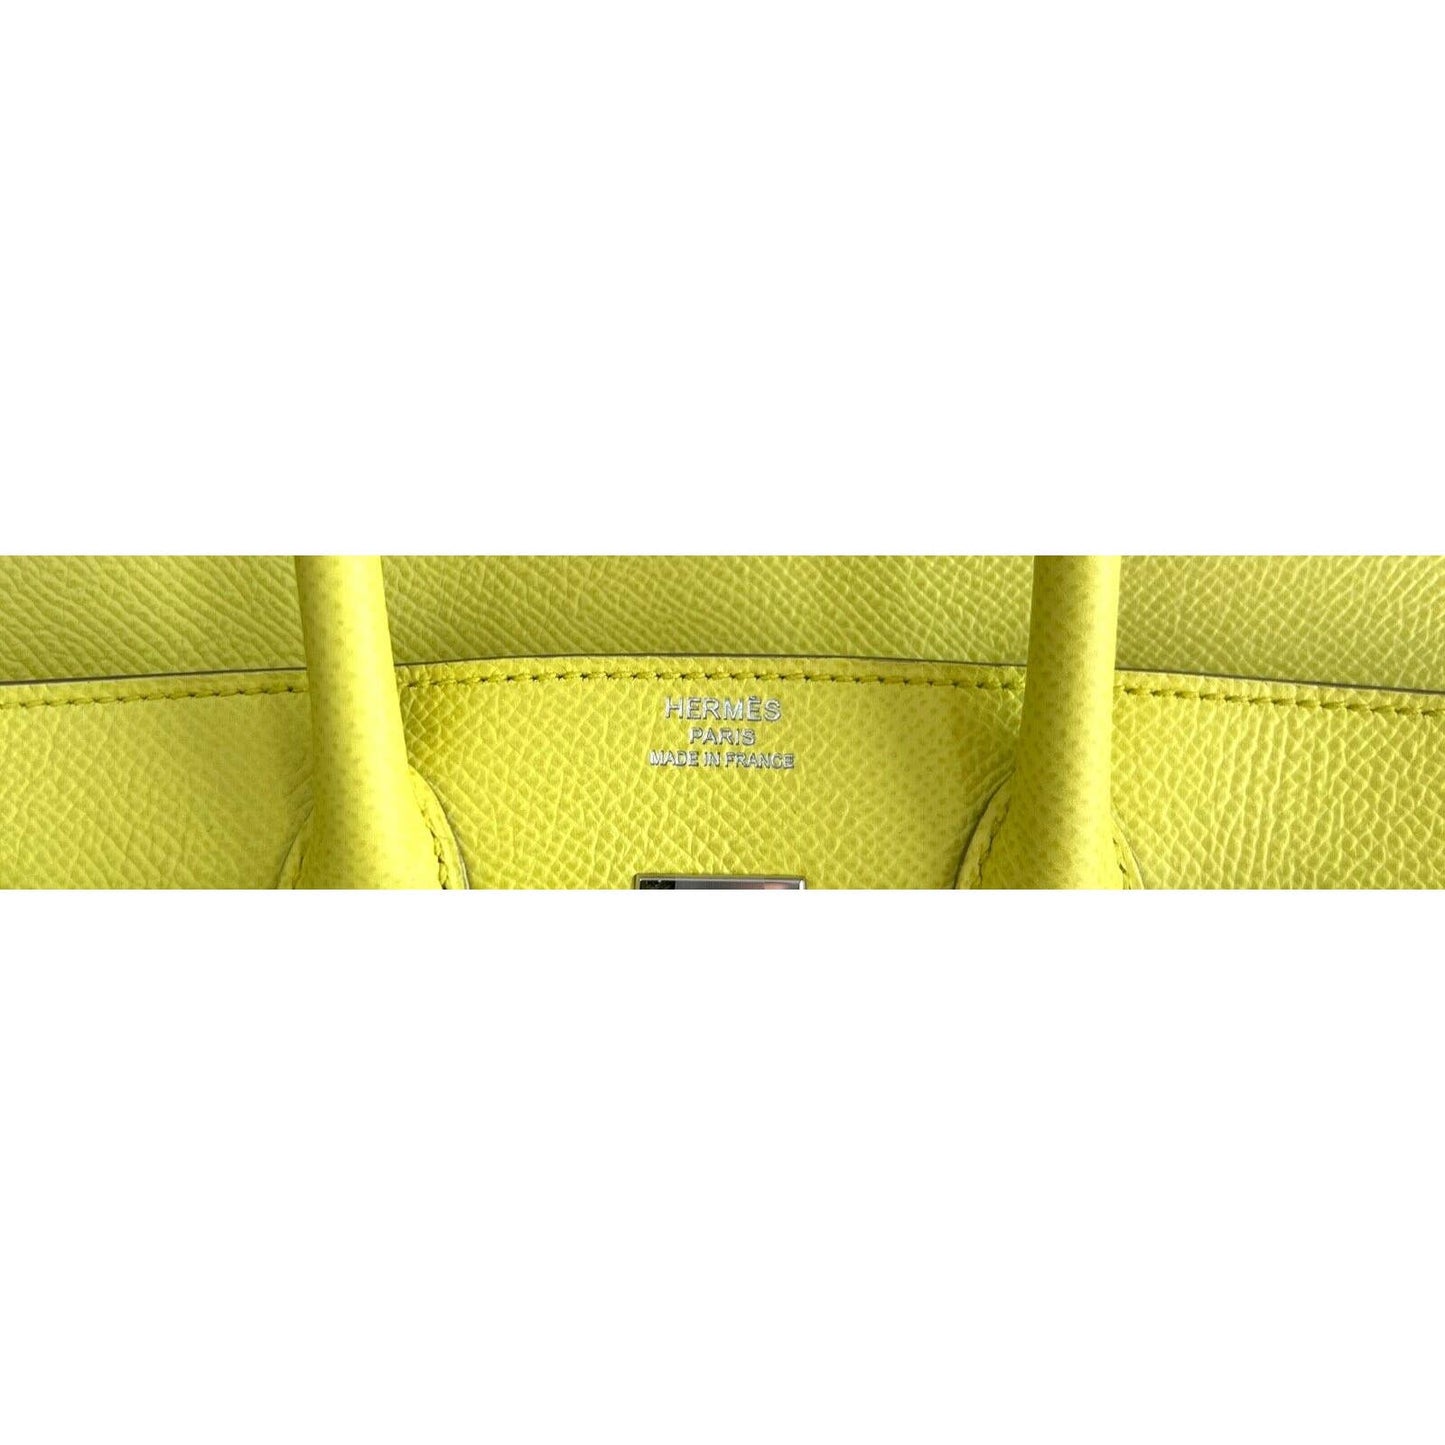 Hermes Birkin 25 Lime Yellow Epsom Leather Palladium Hardware Bag Handbag